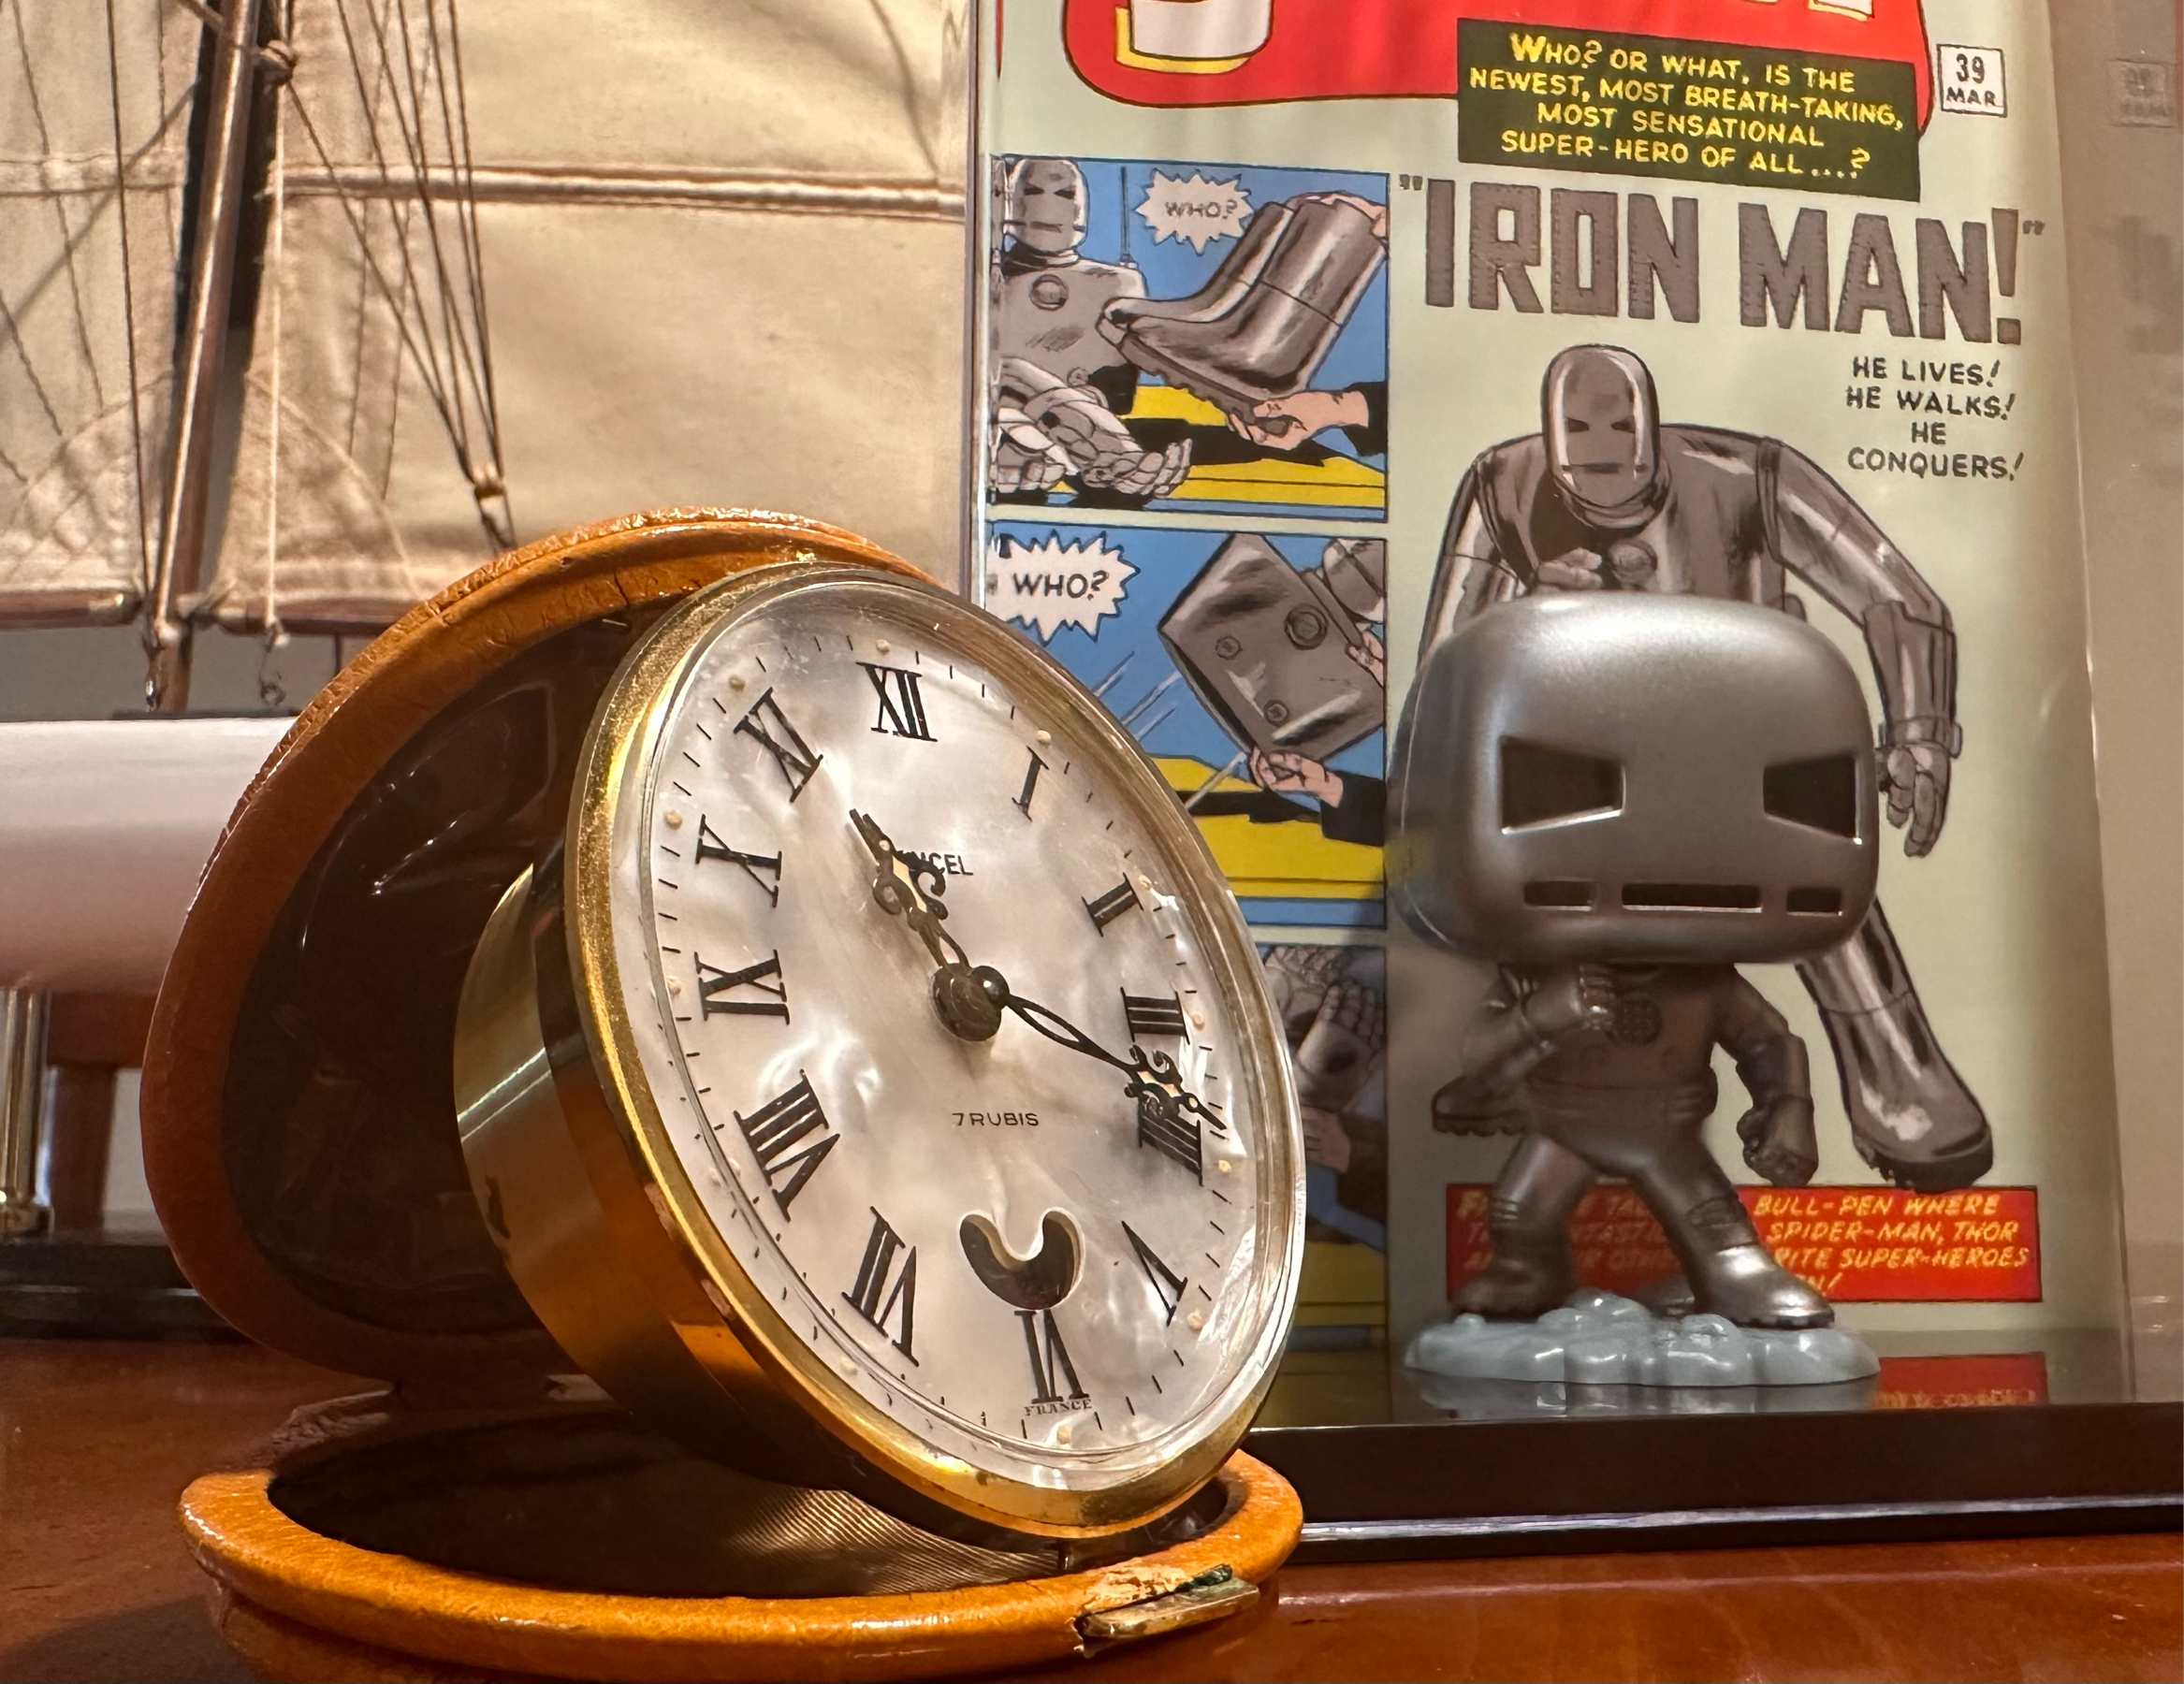 Vintage travel alarm clock and Iron Man funko. 